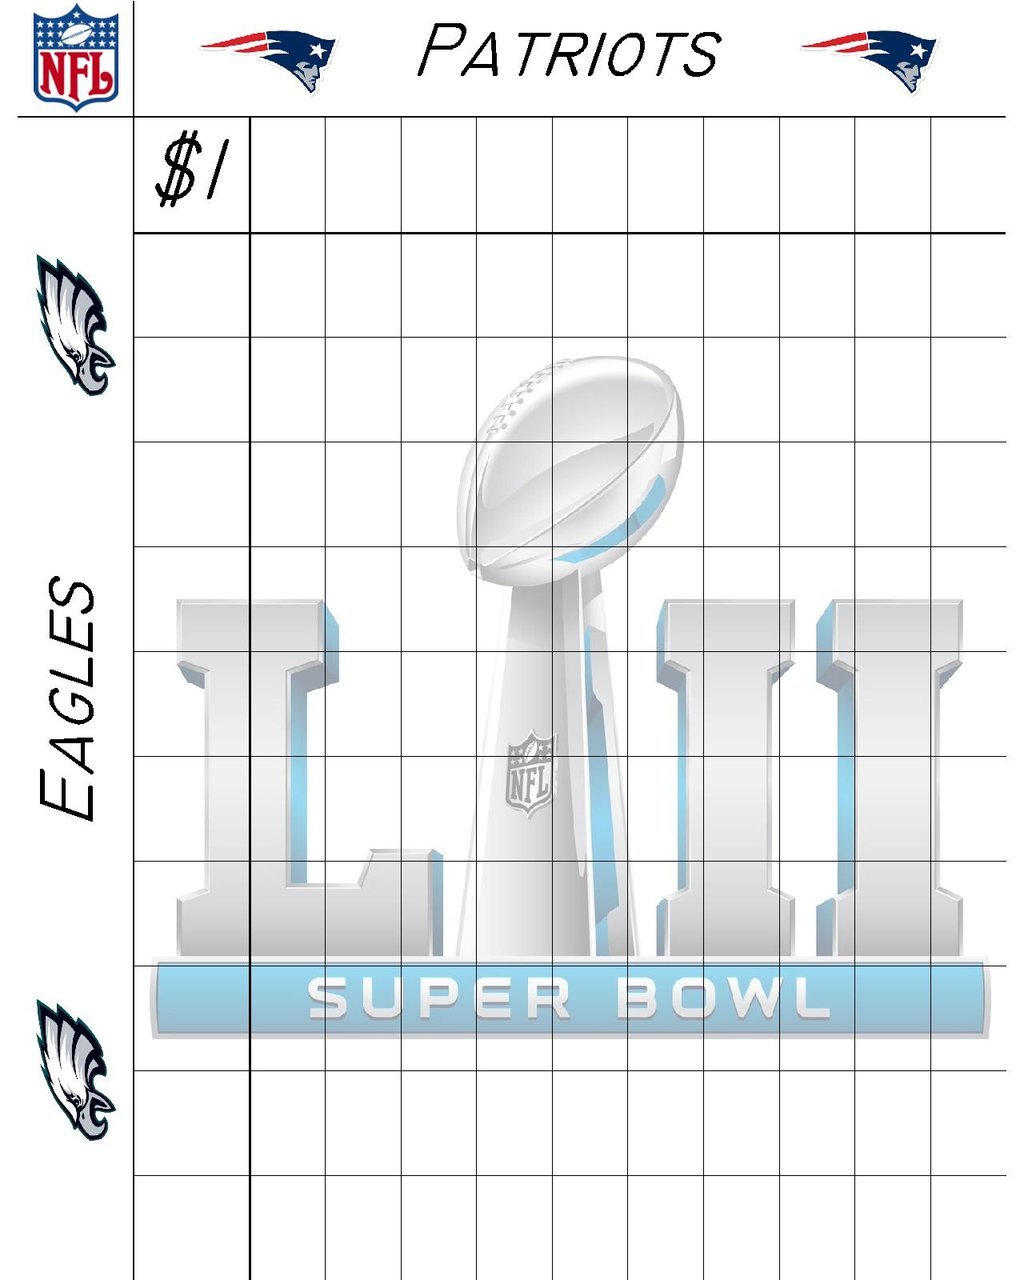 $1 Super Bowl Squares.jpg